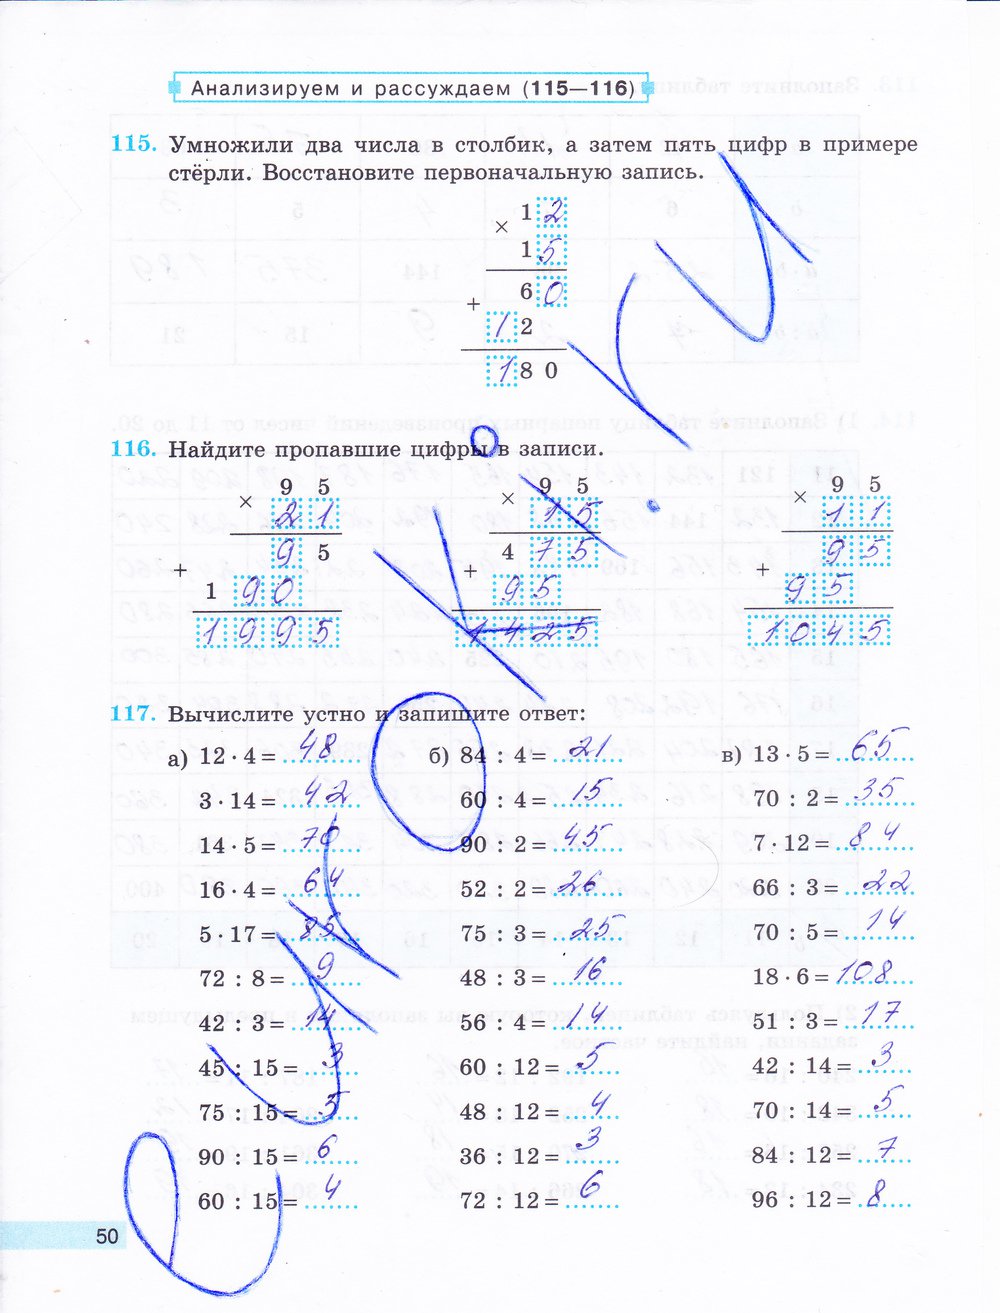 Математика 5 класс 1 часть учебник бунимович